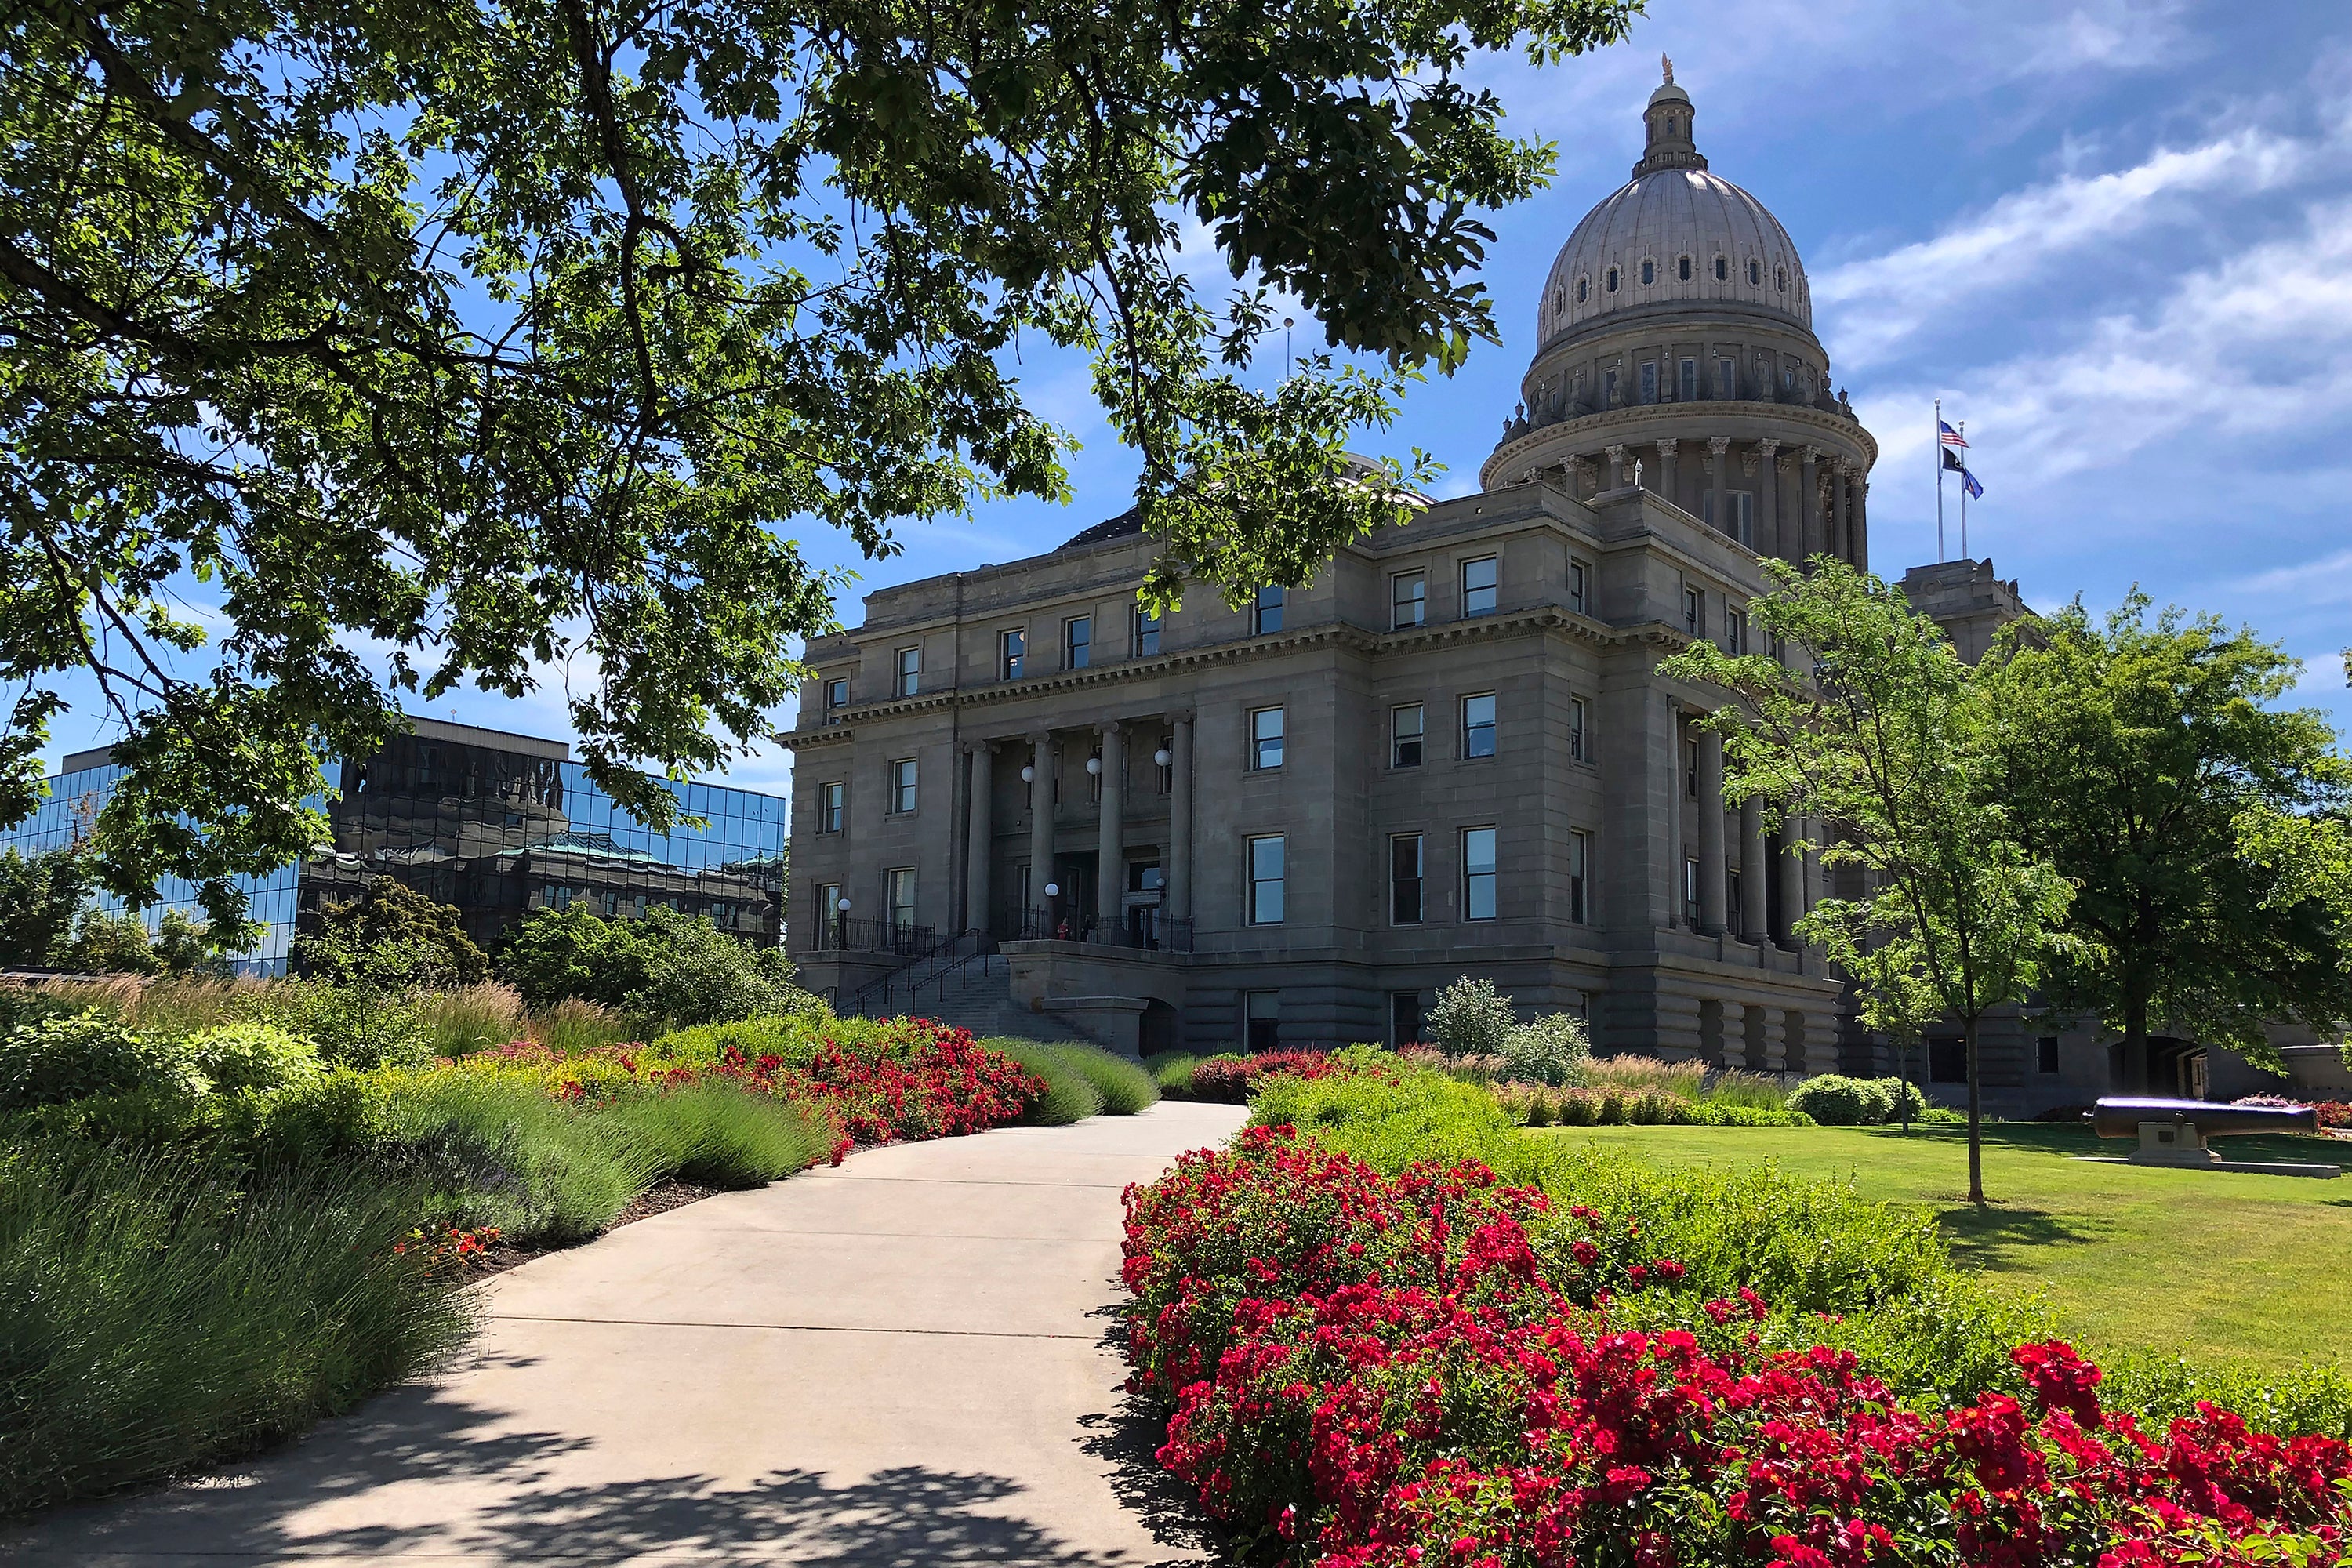 The Idaho State Capitol in Boise, Idaho